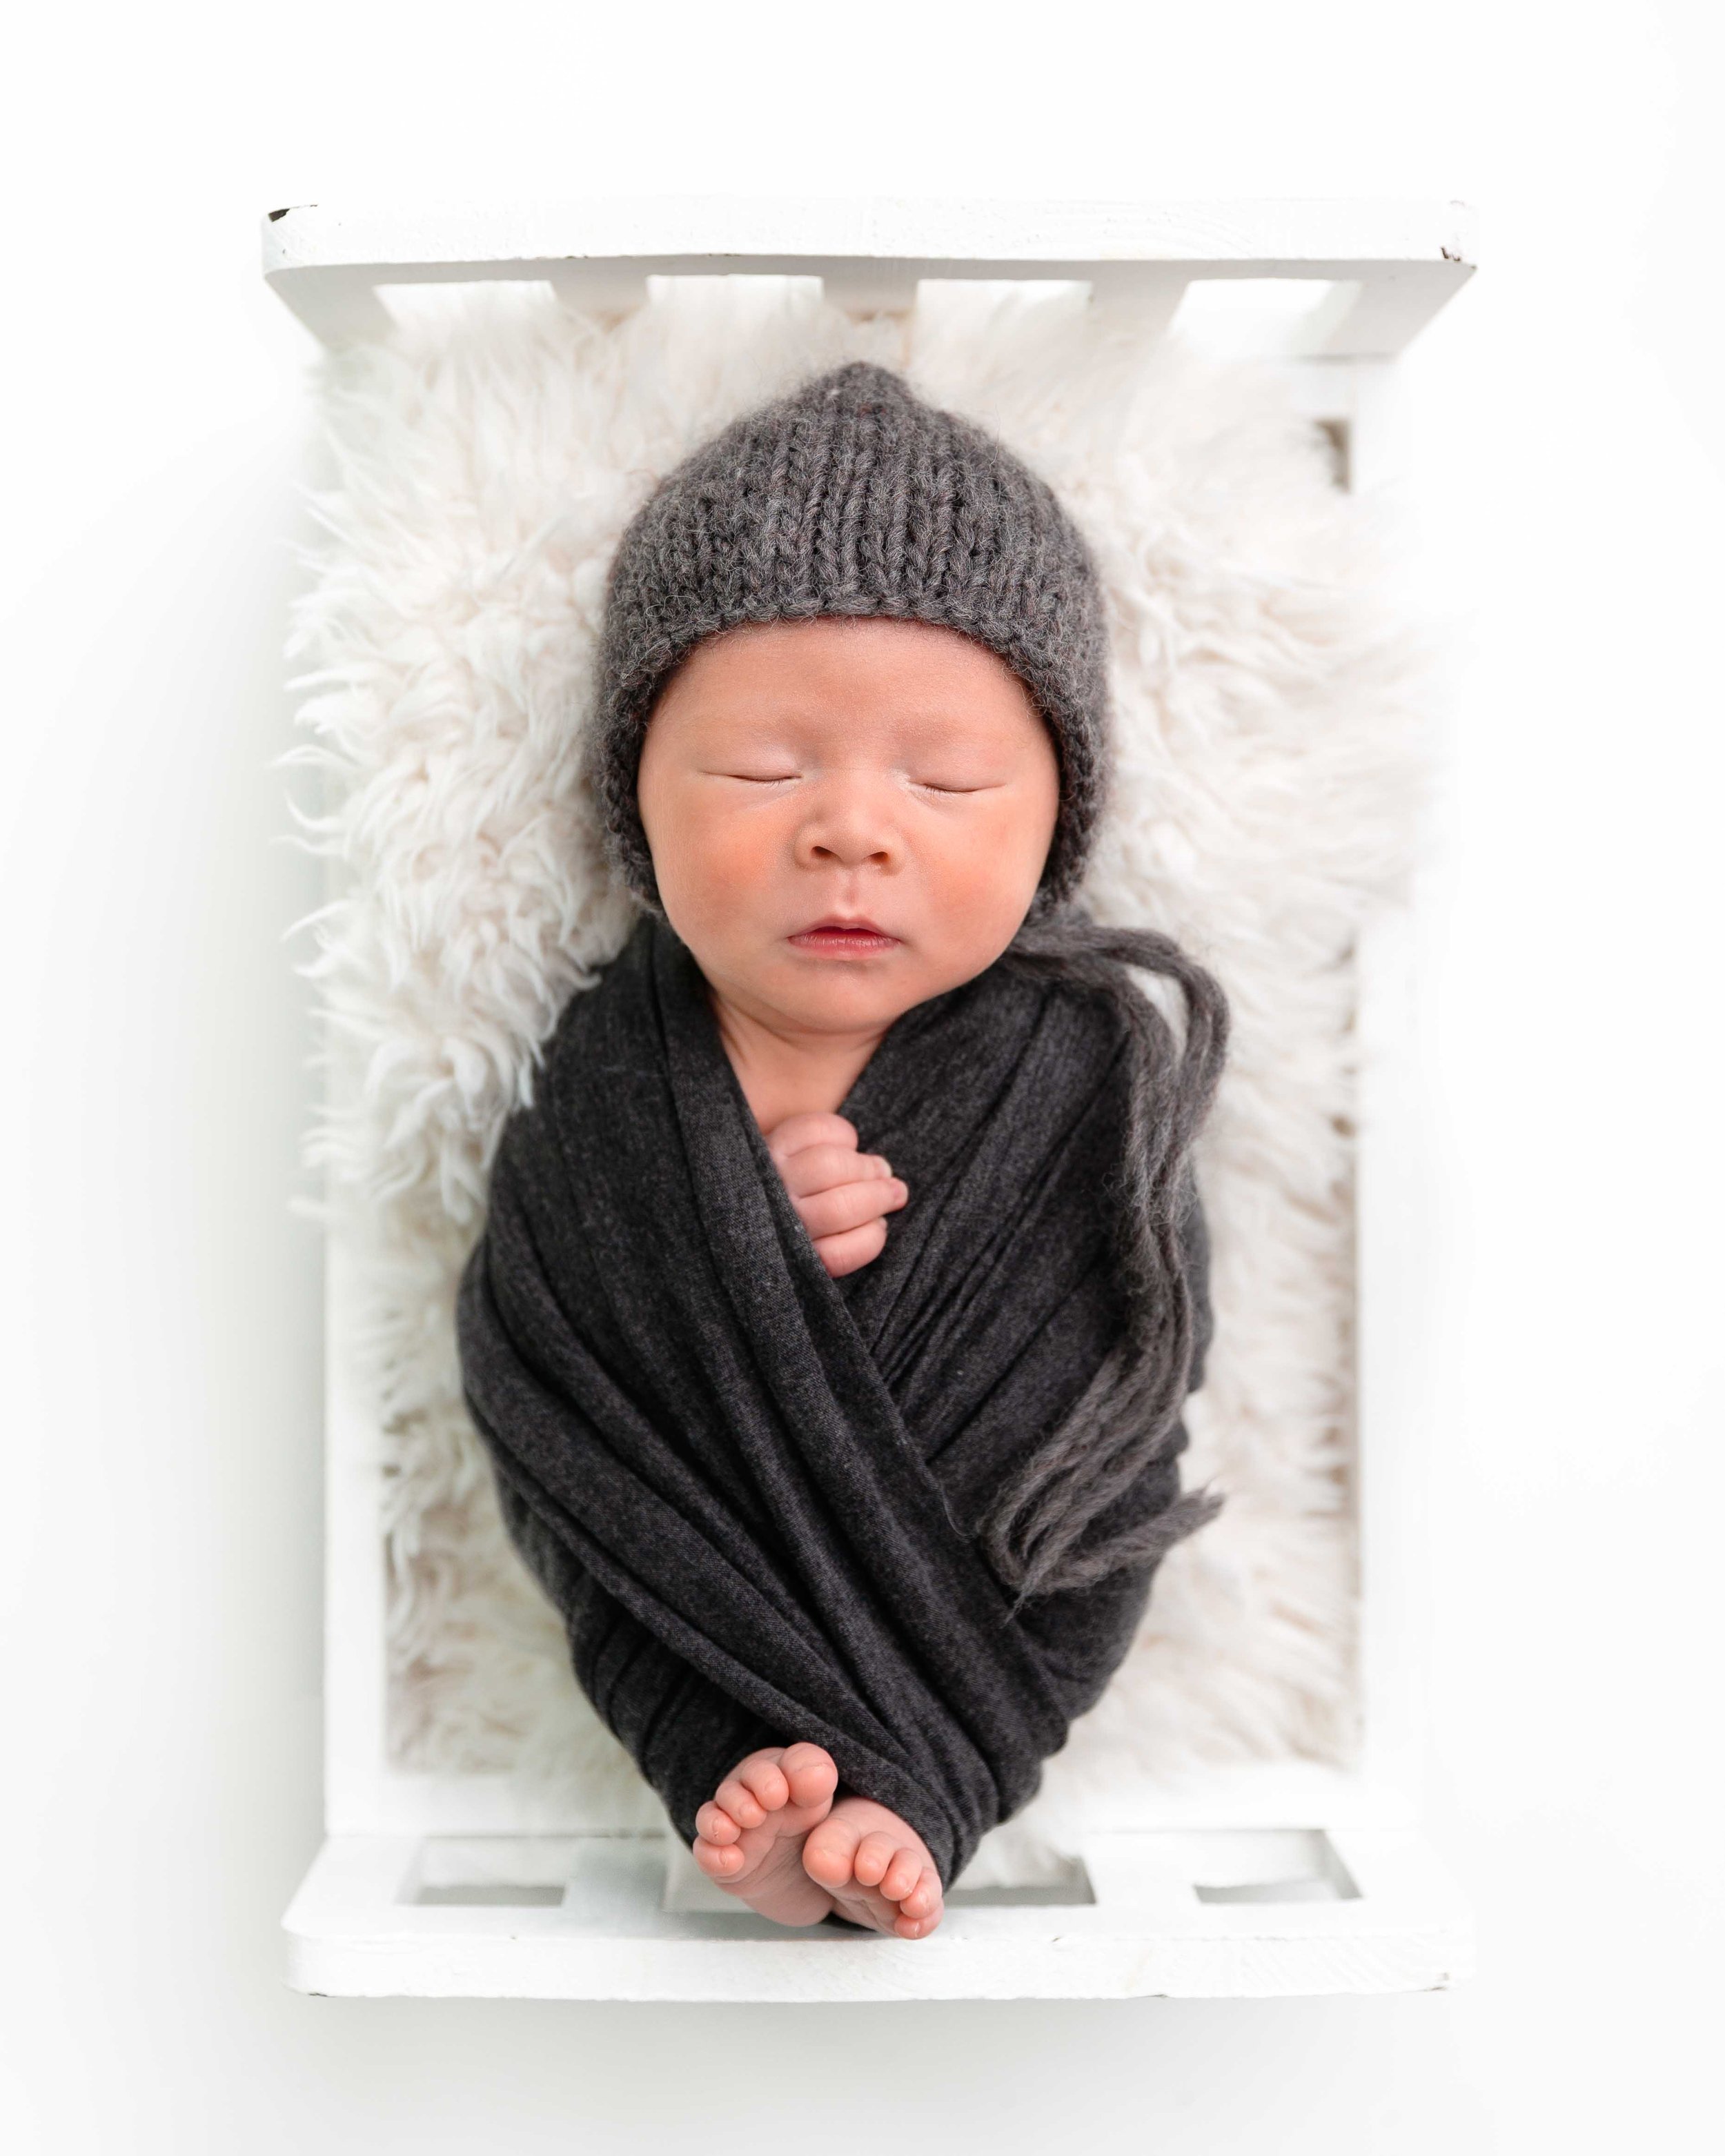 Baby-boy-images-newborn-photography-spokane-photograher-washington-5.jpg